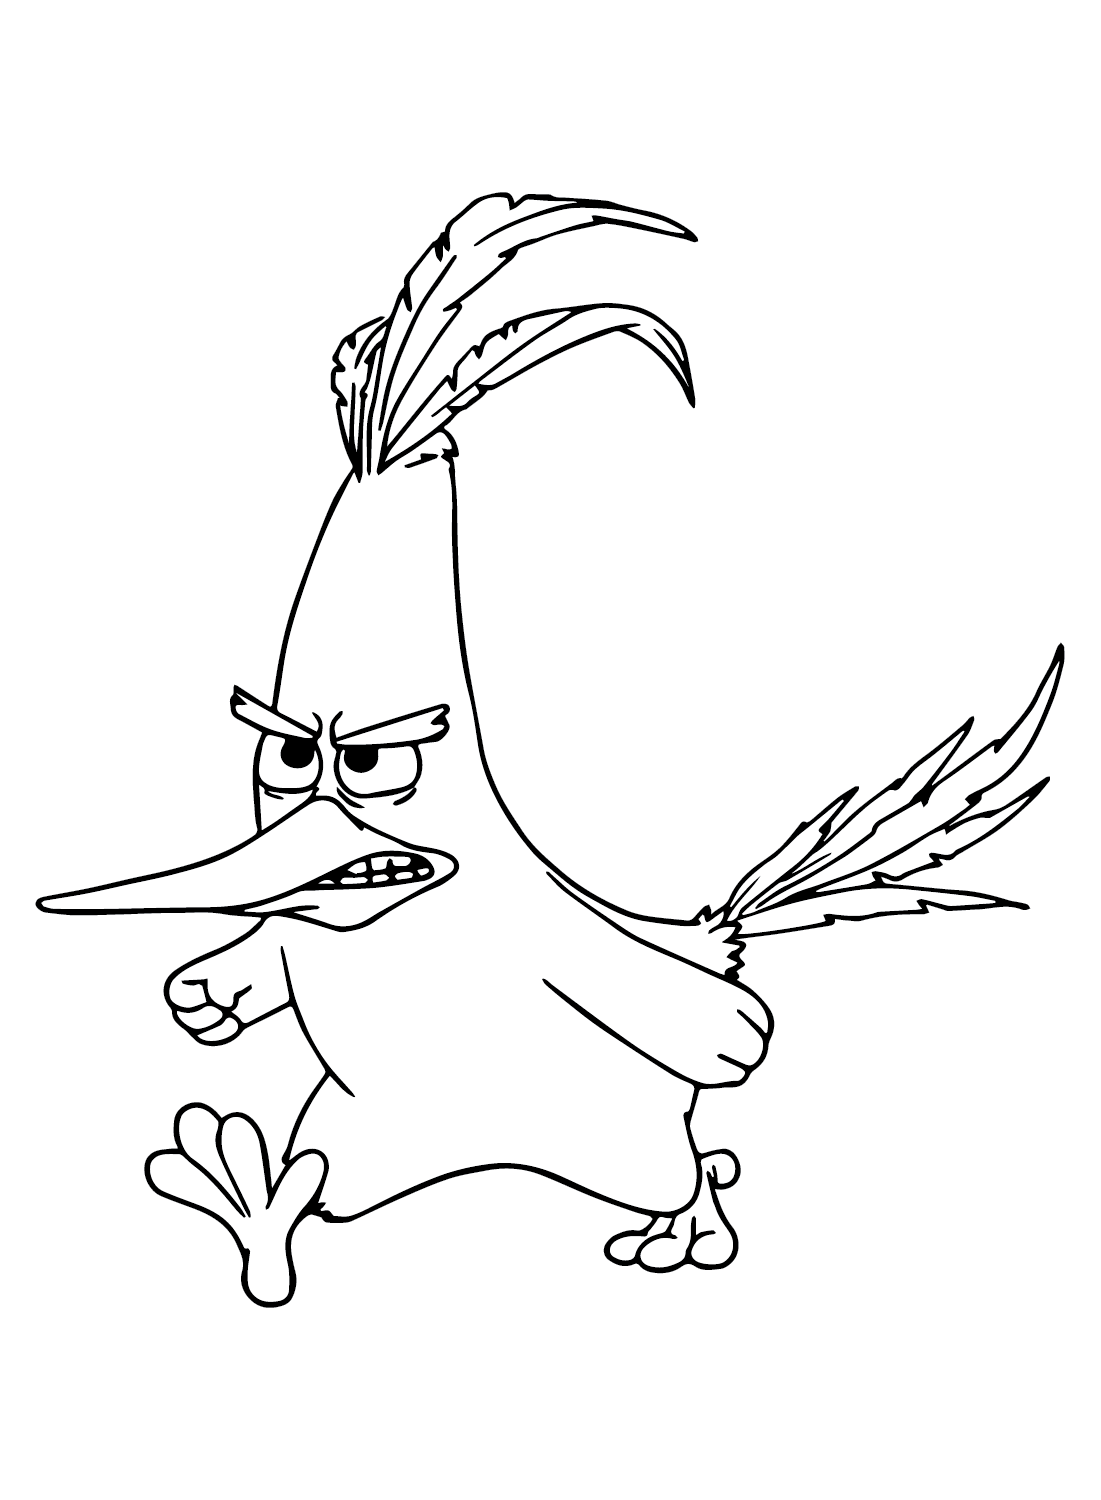 Чак (Angry Bird) для детей от Чака (Angry Bird)